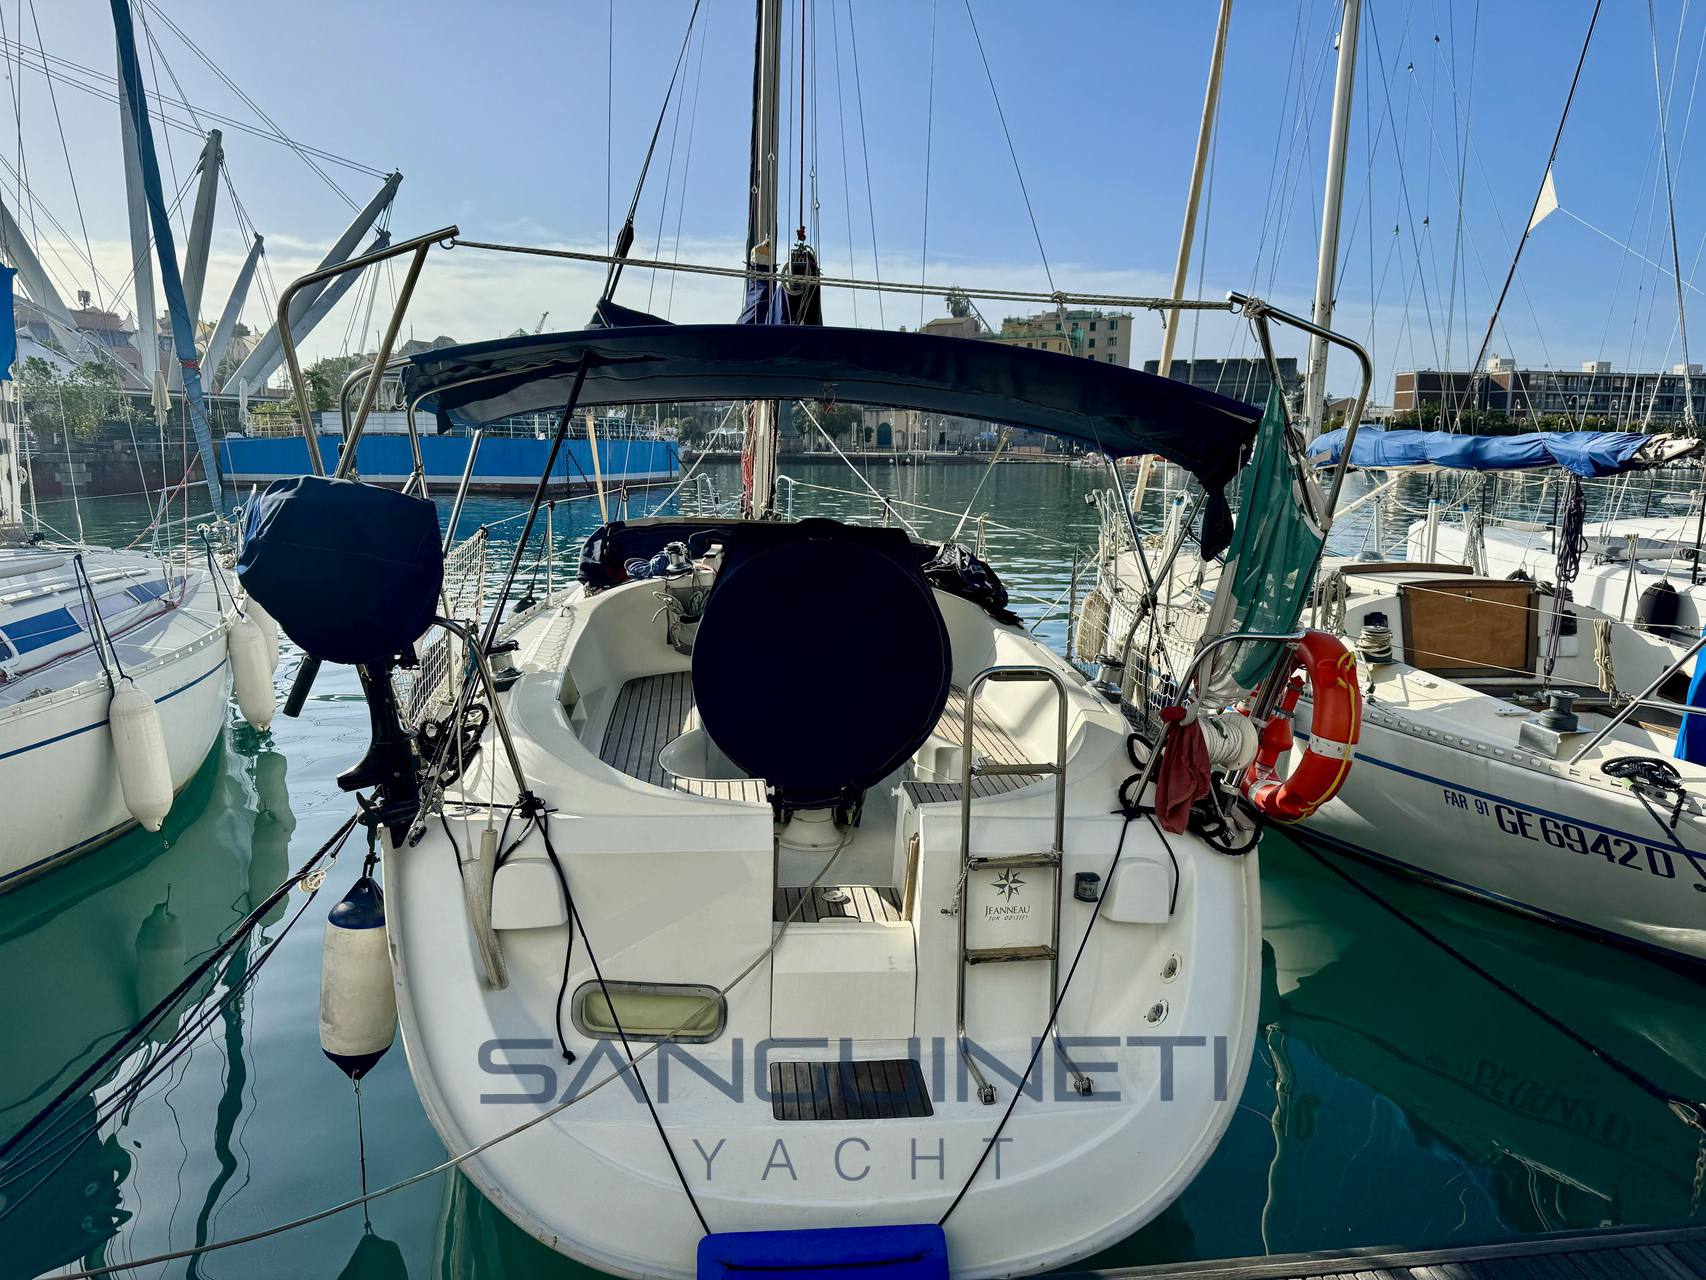 Jeanneau Sun odyssey 32.2 Barco à vela usado para venda